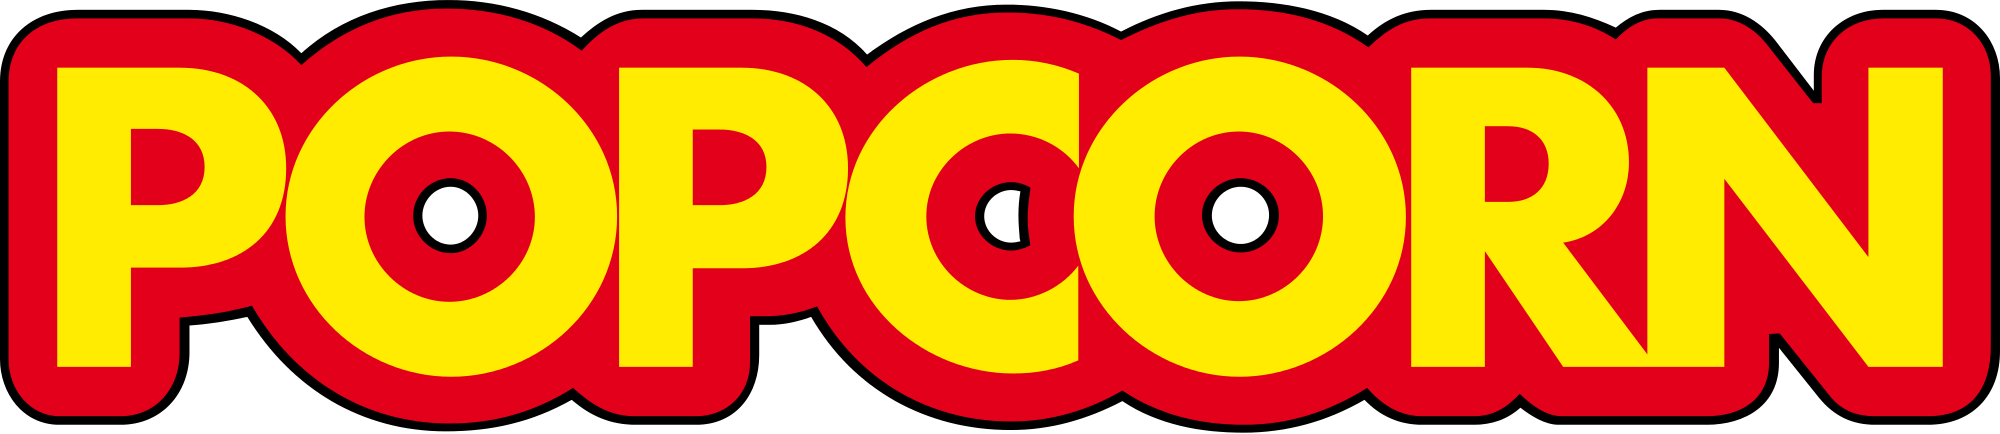 Open - Popcorn Magazin Logo (2000x434)